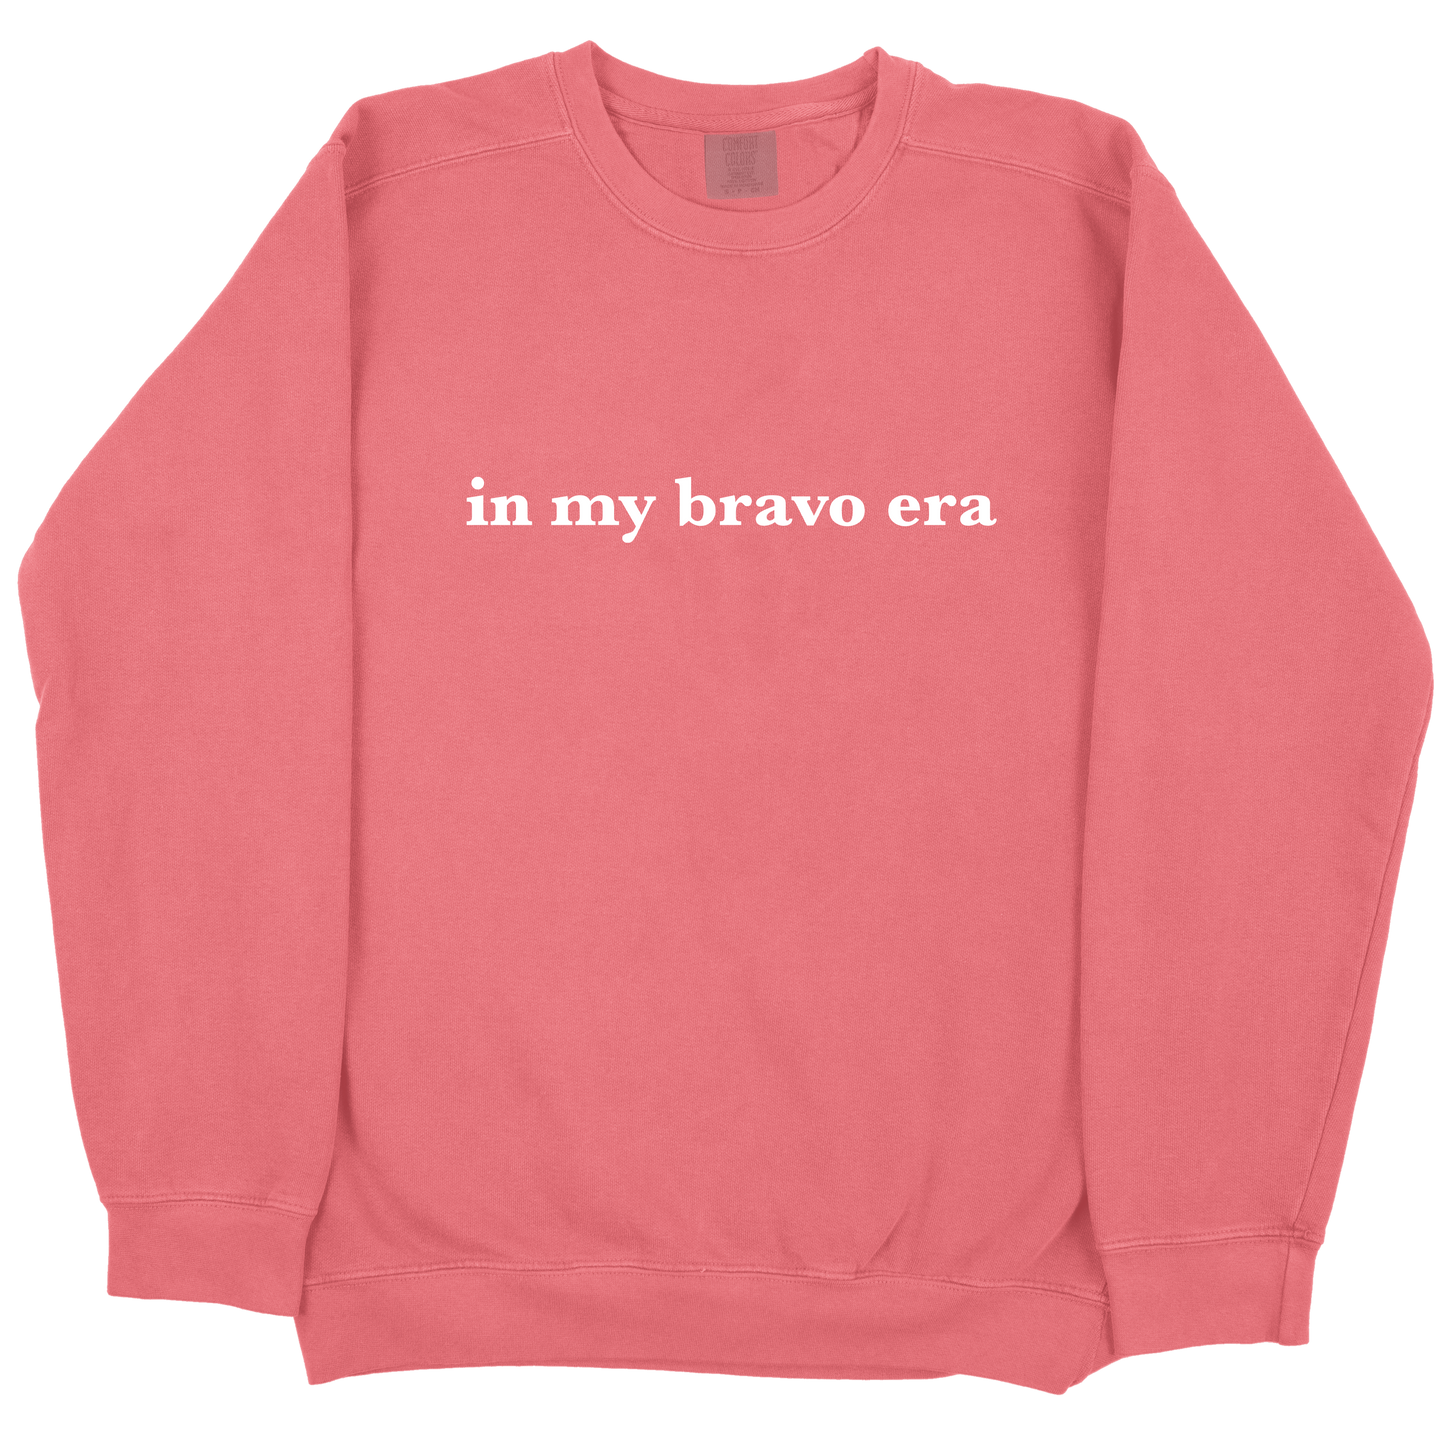 In My Bravo Era CC Sweatshirt - Watermelon